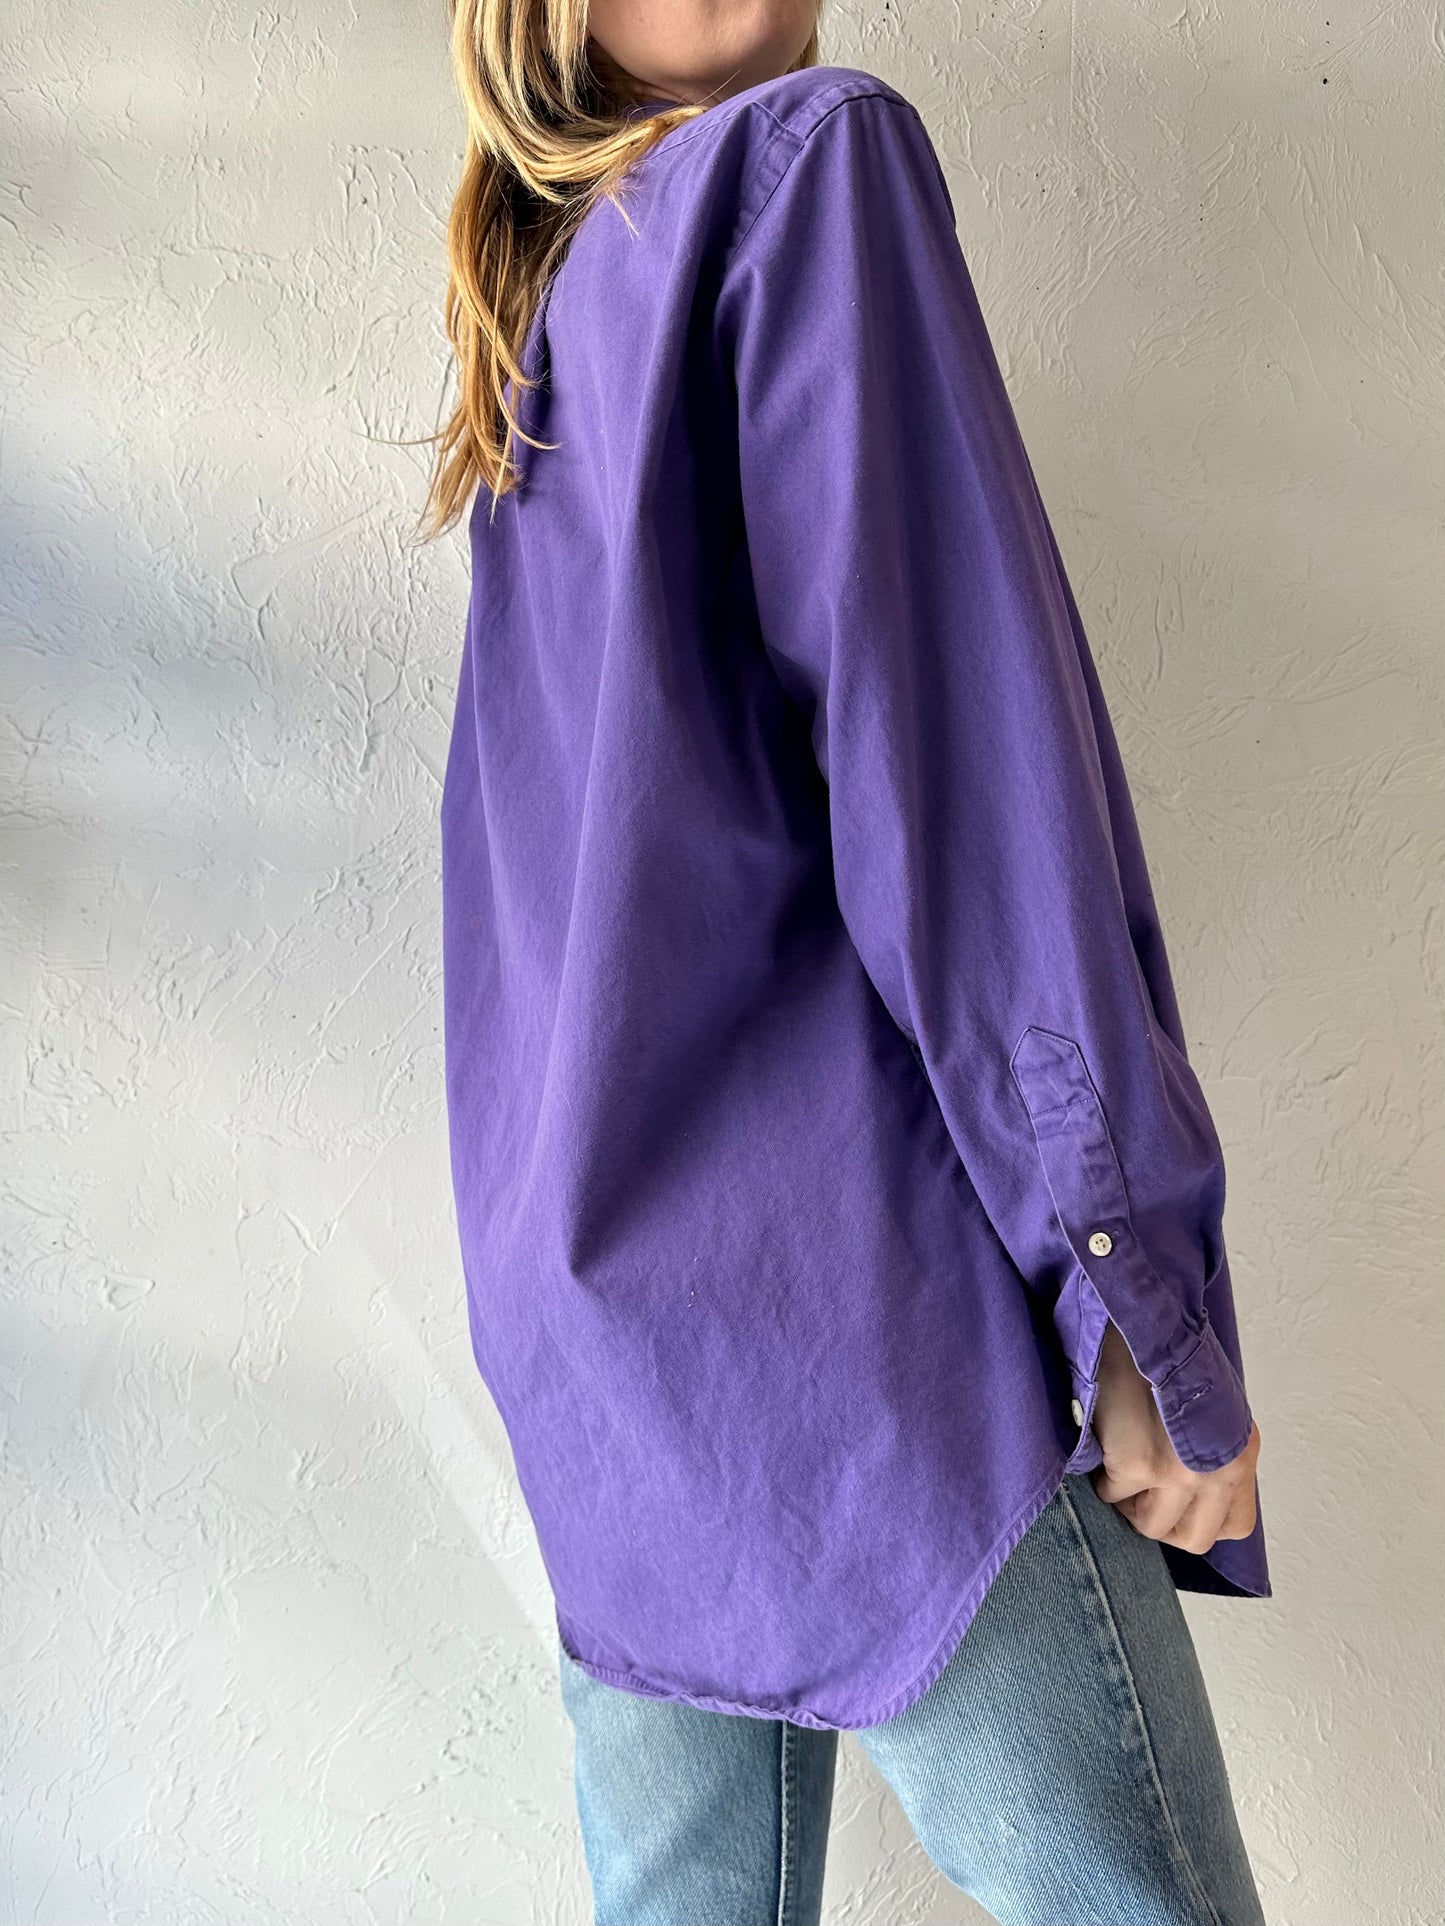 Vintage 'Ralph Lauren' Purple Button Up Shirt / Small